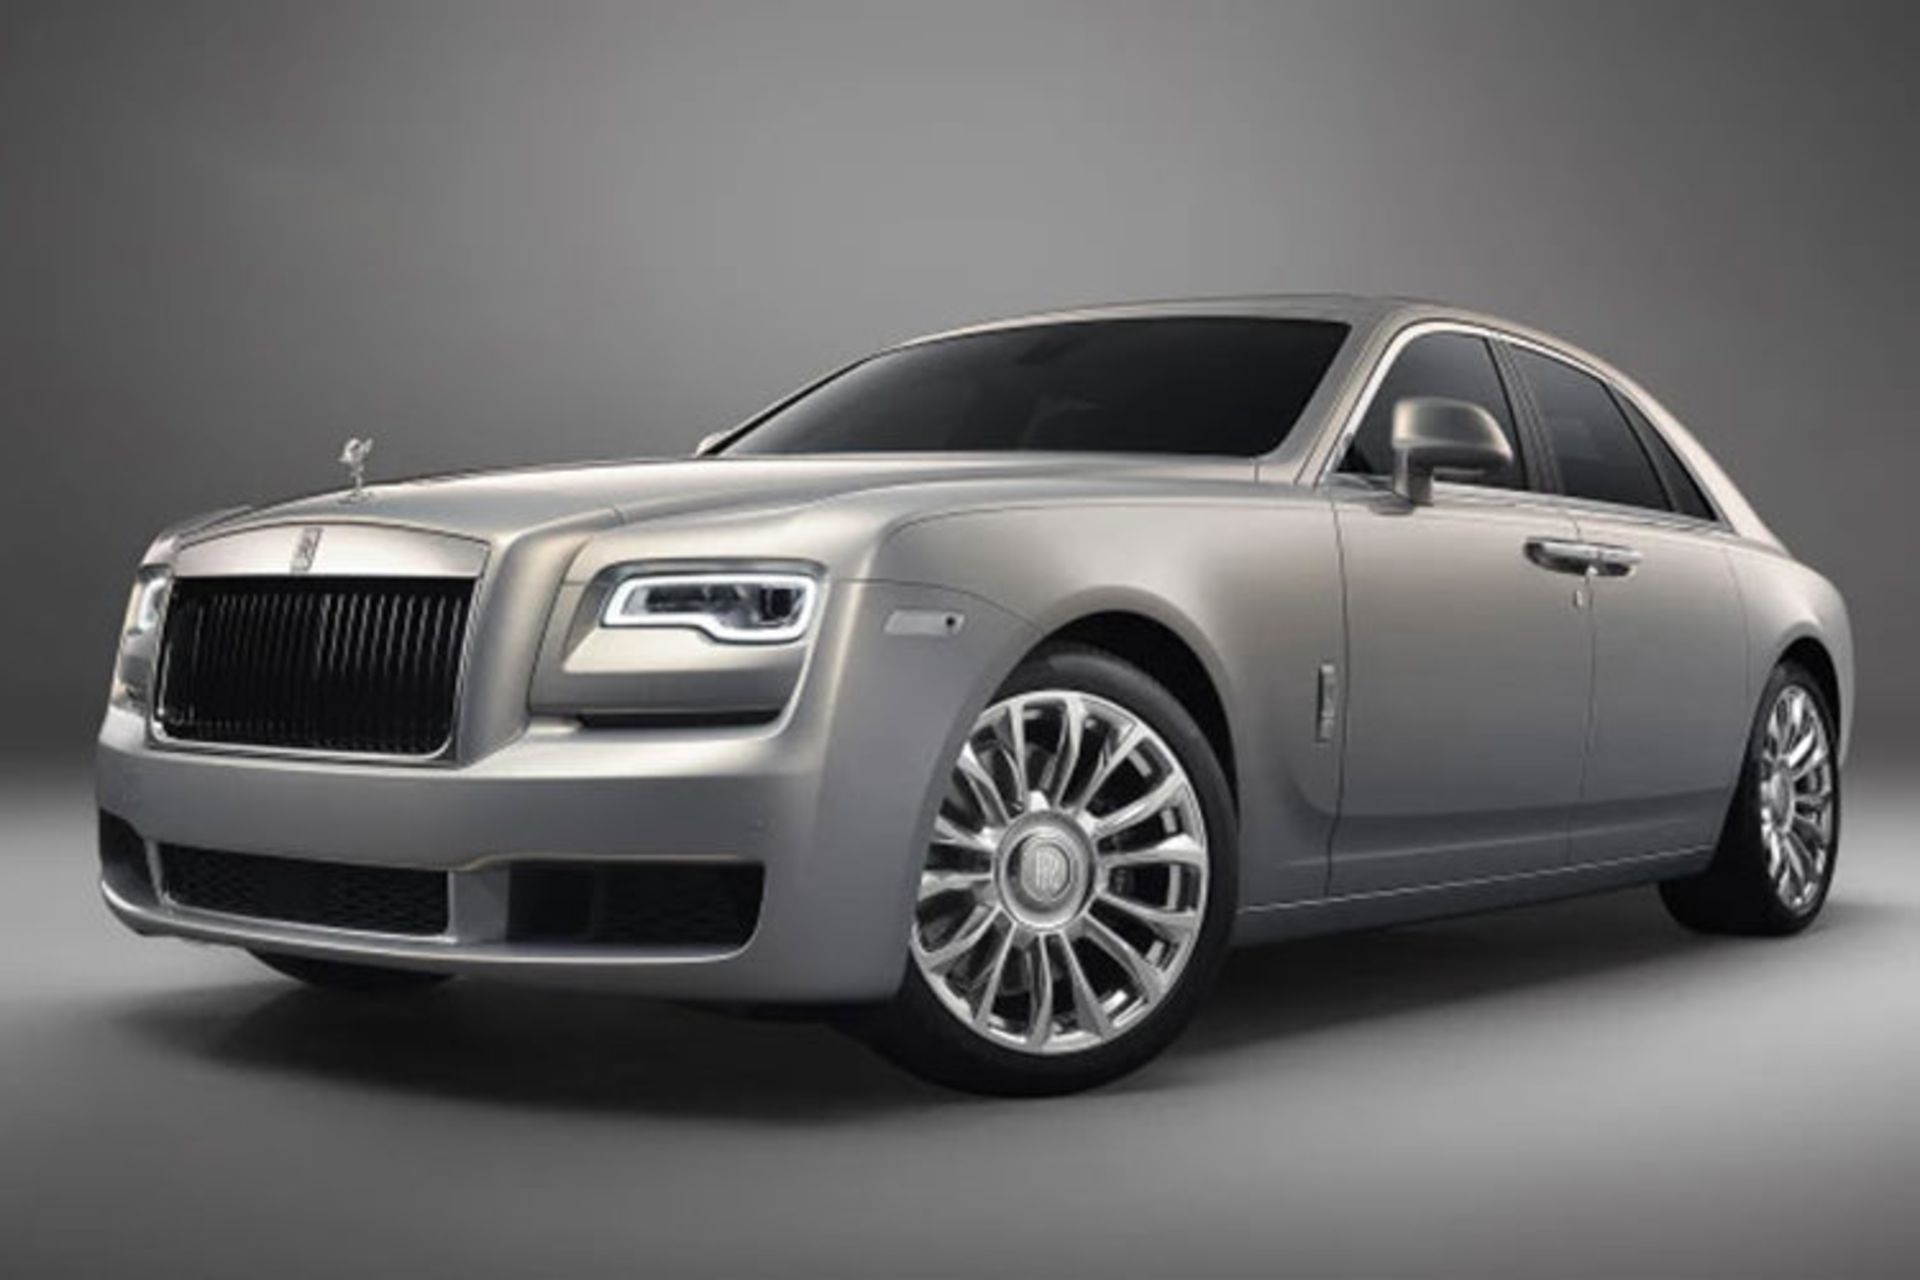  Rolls-Royce Silver Ghost / رولزرویس سیلور گوست